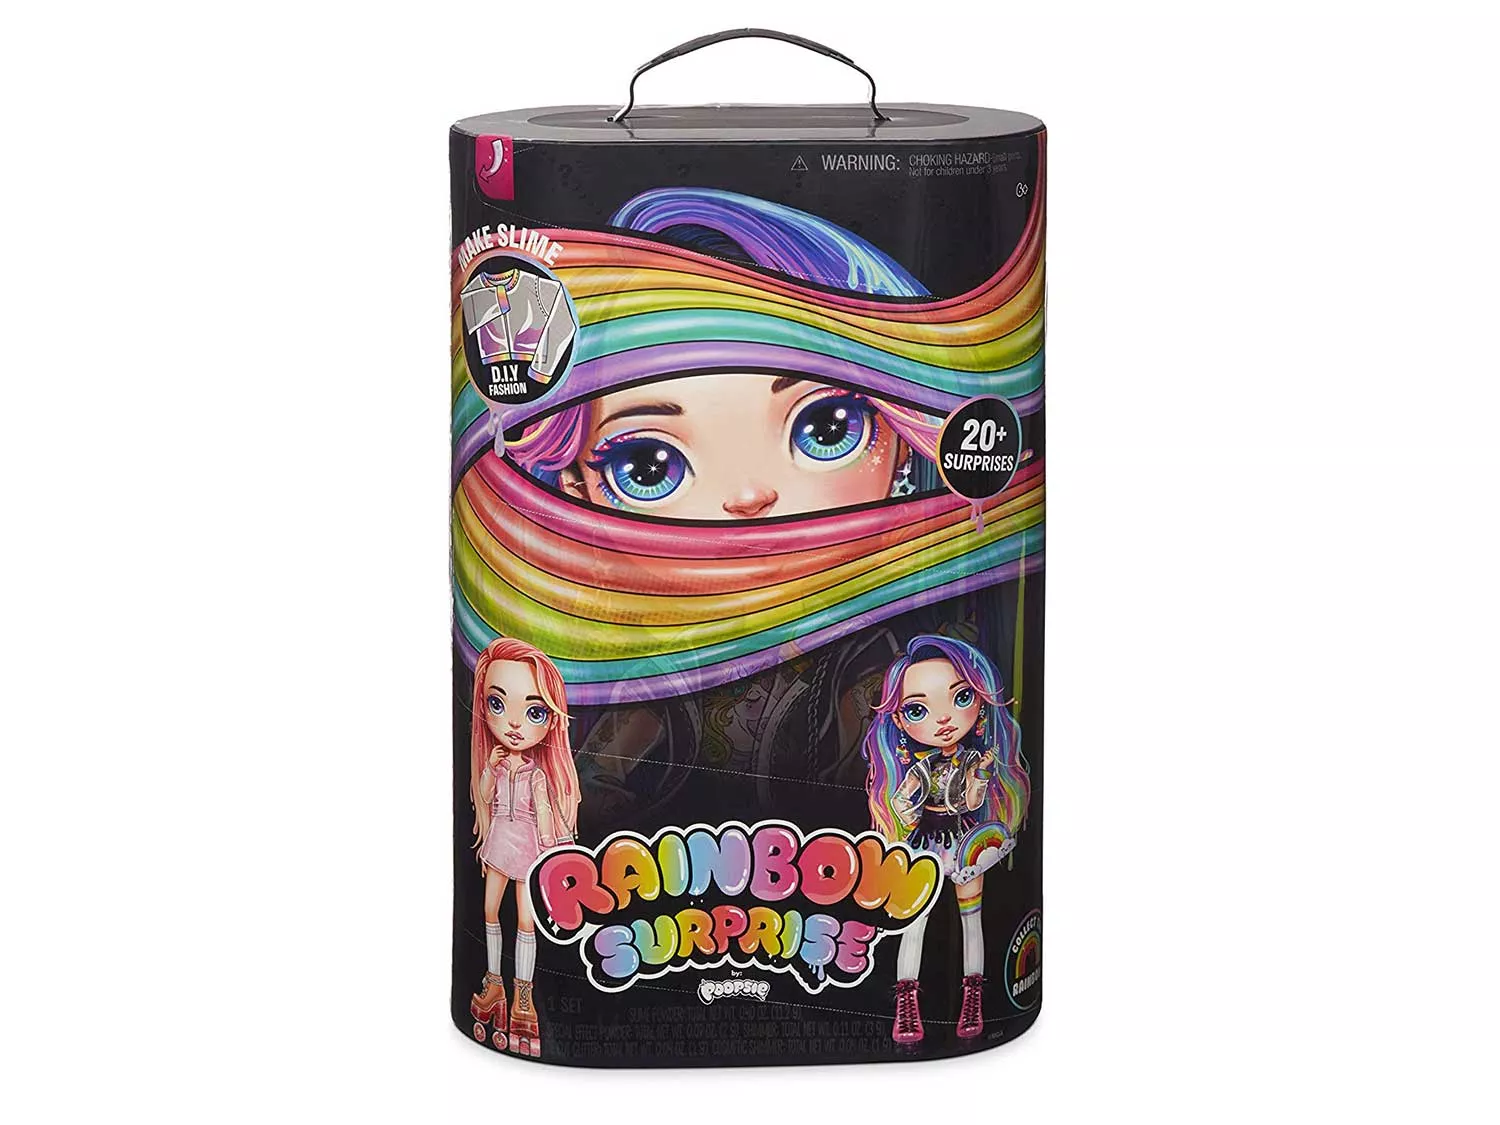 Poopsie Rainbow Surprise Dolls: Rainbow Dream Or Pixie Rose